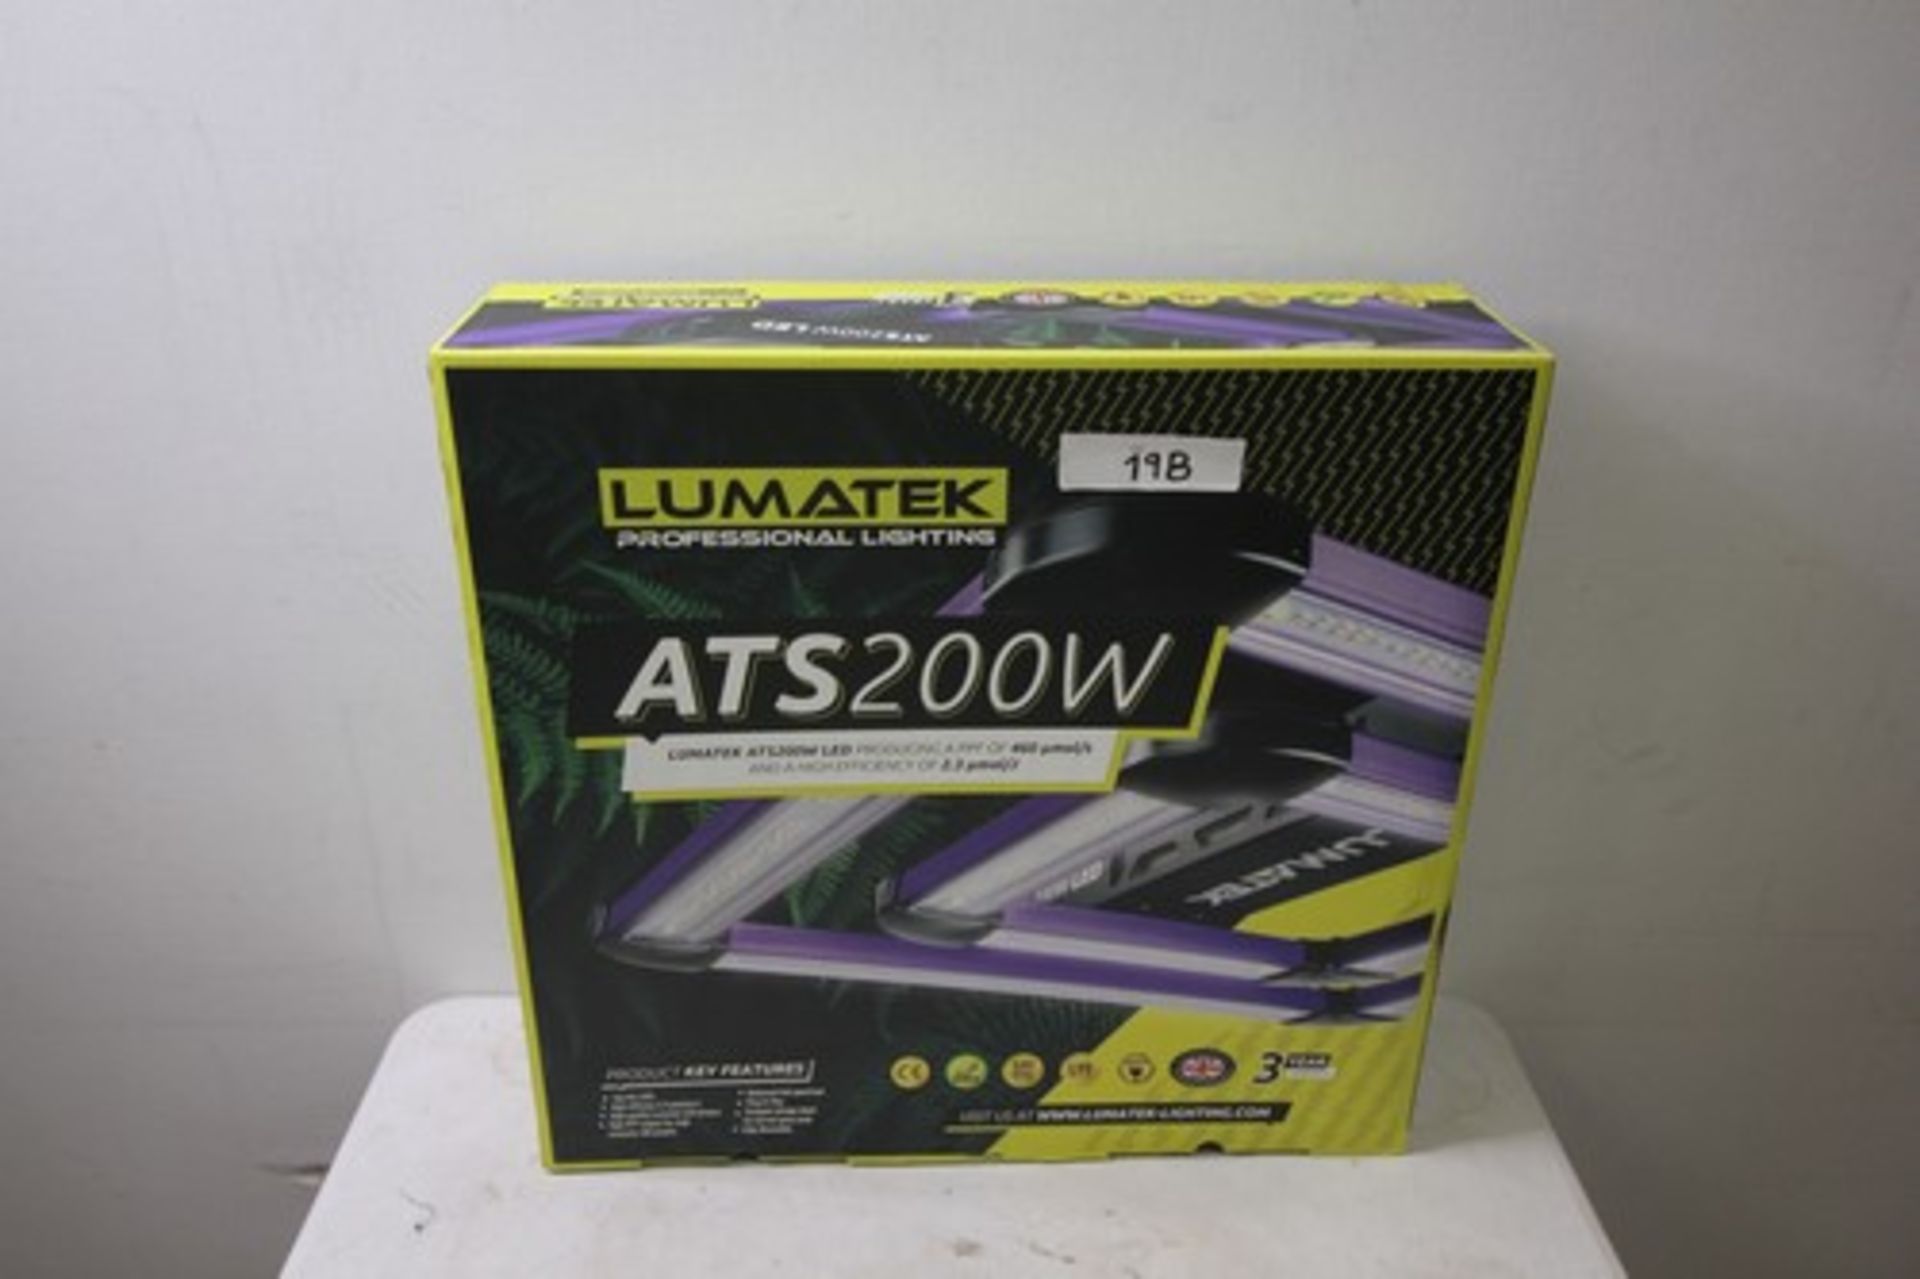 1 x Lumatek high quality LED horticultural lighting, model ATS2000 - New in box (ES1)